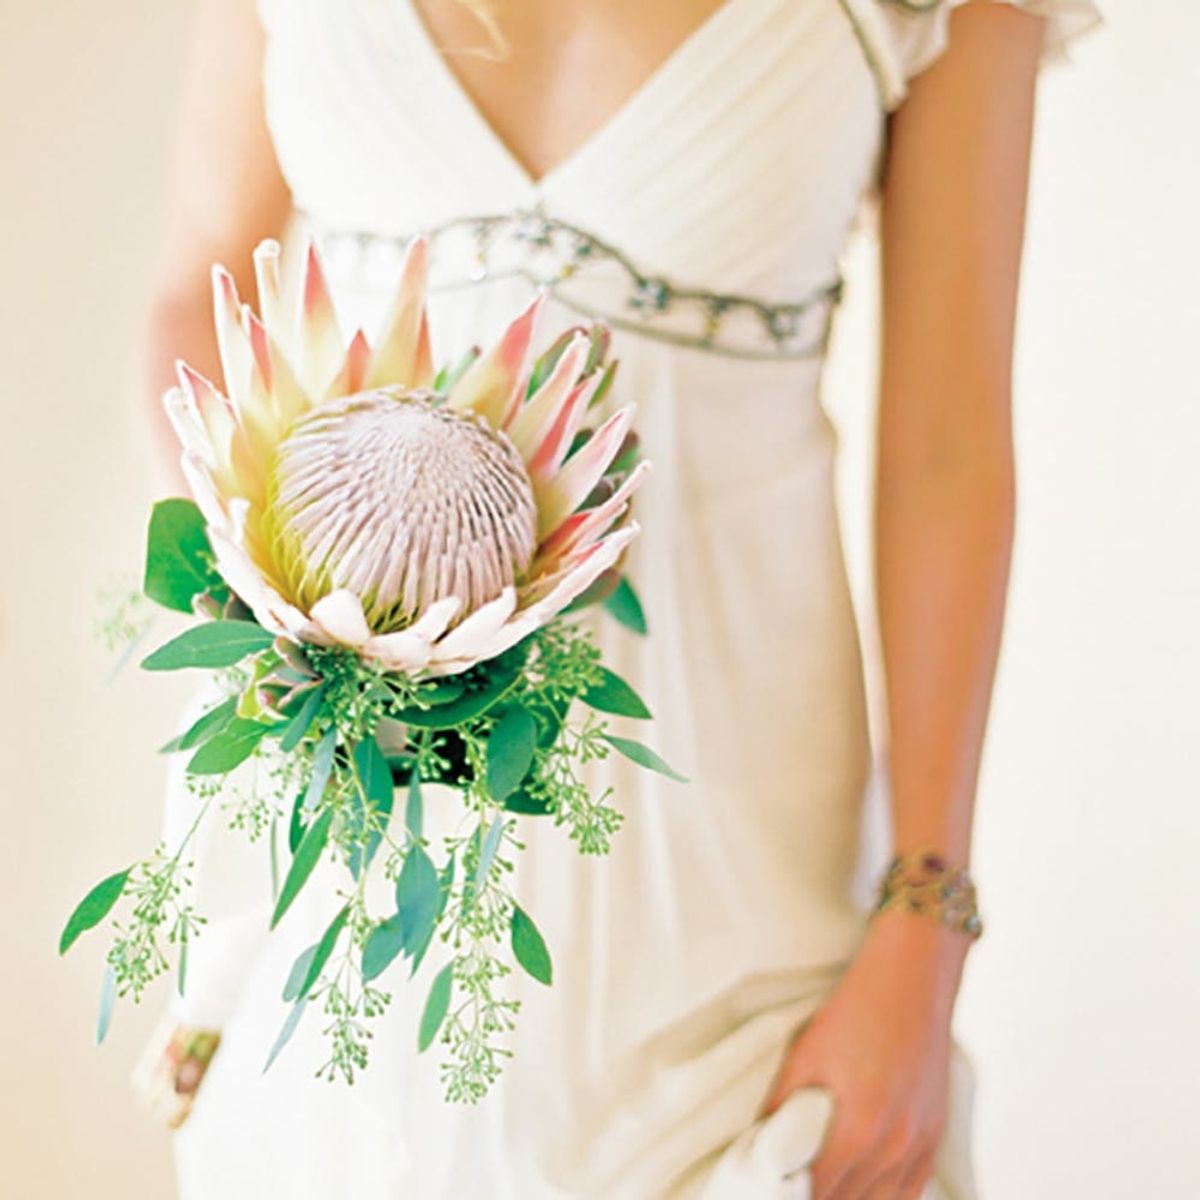 12 Single-Stem “Bouquets” for the Minimalist Bride